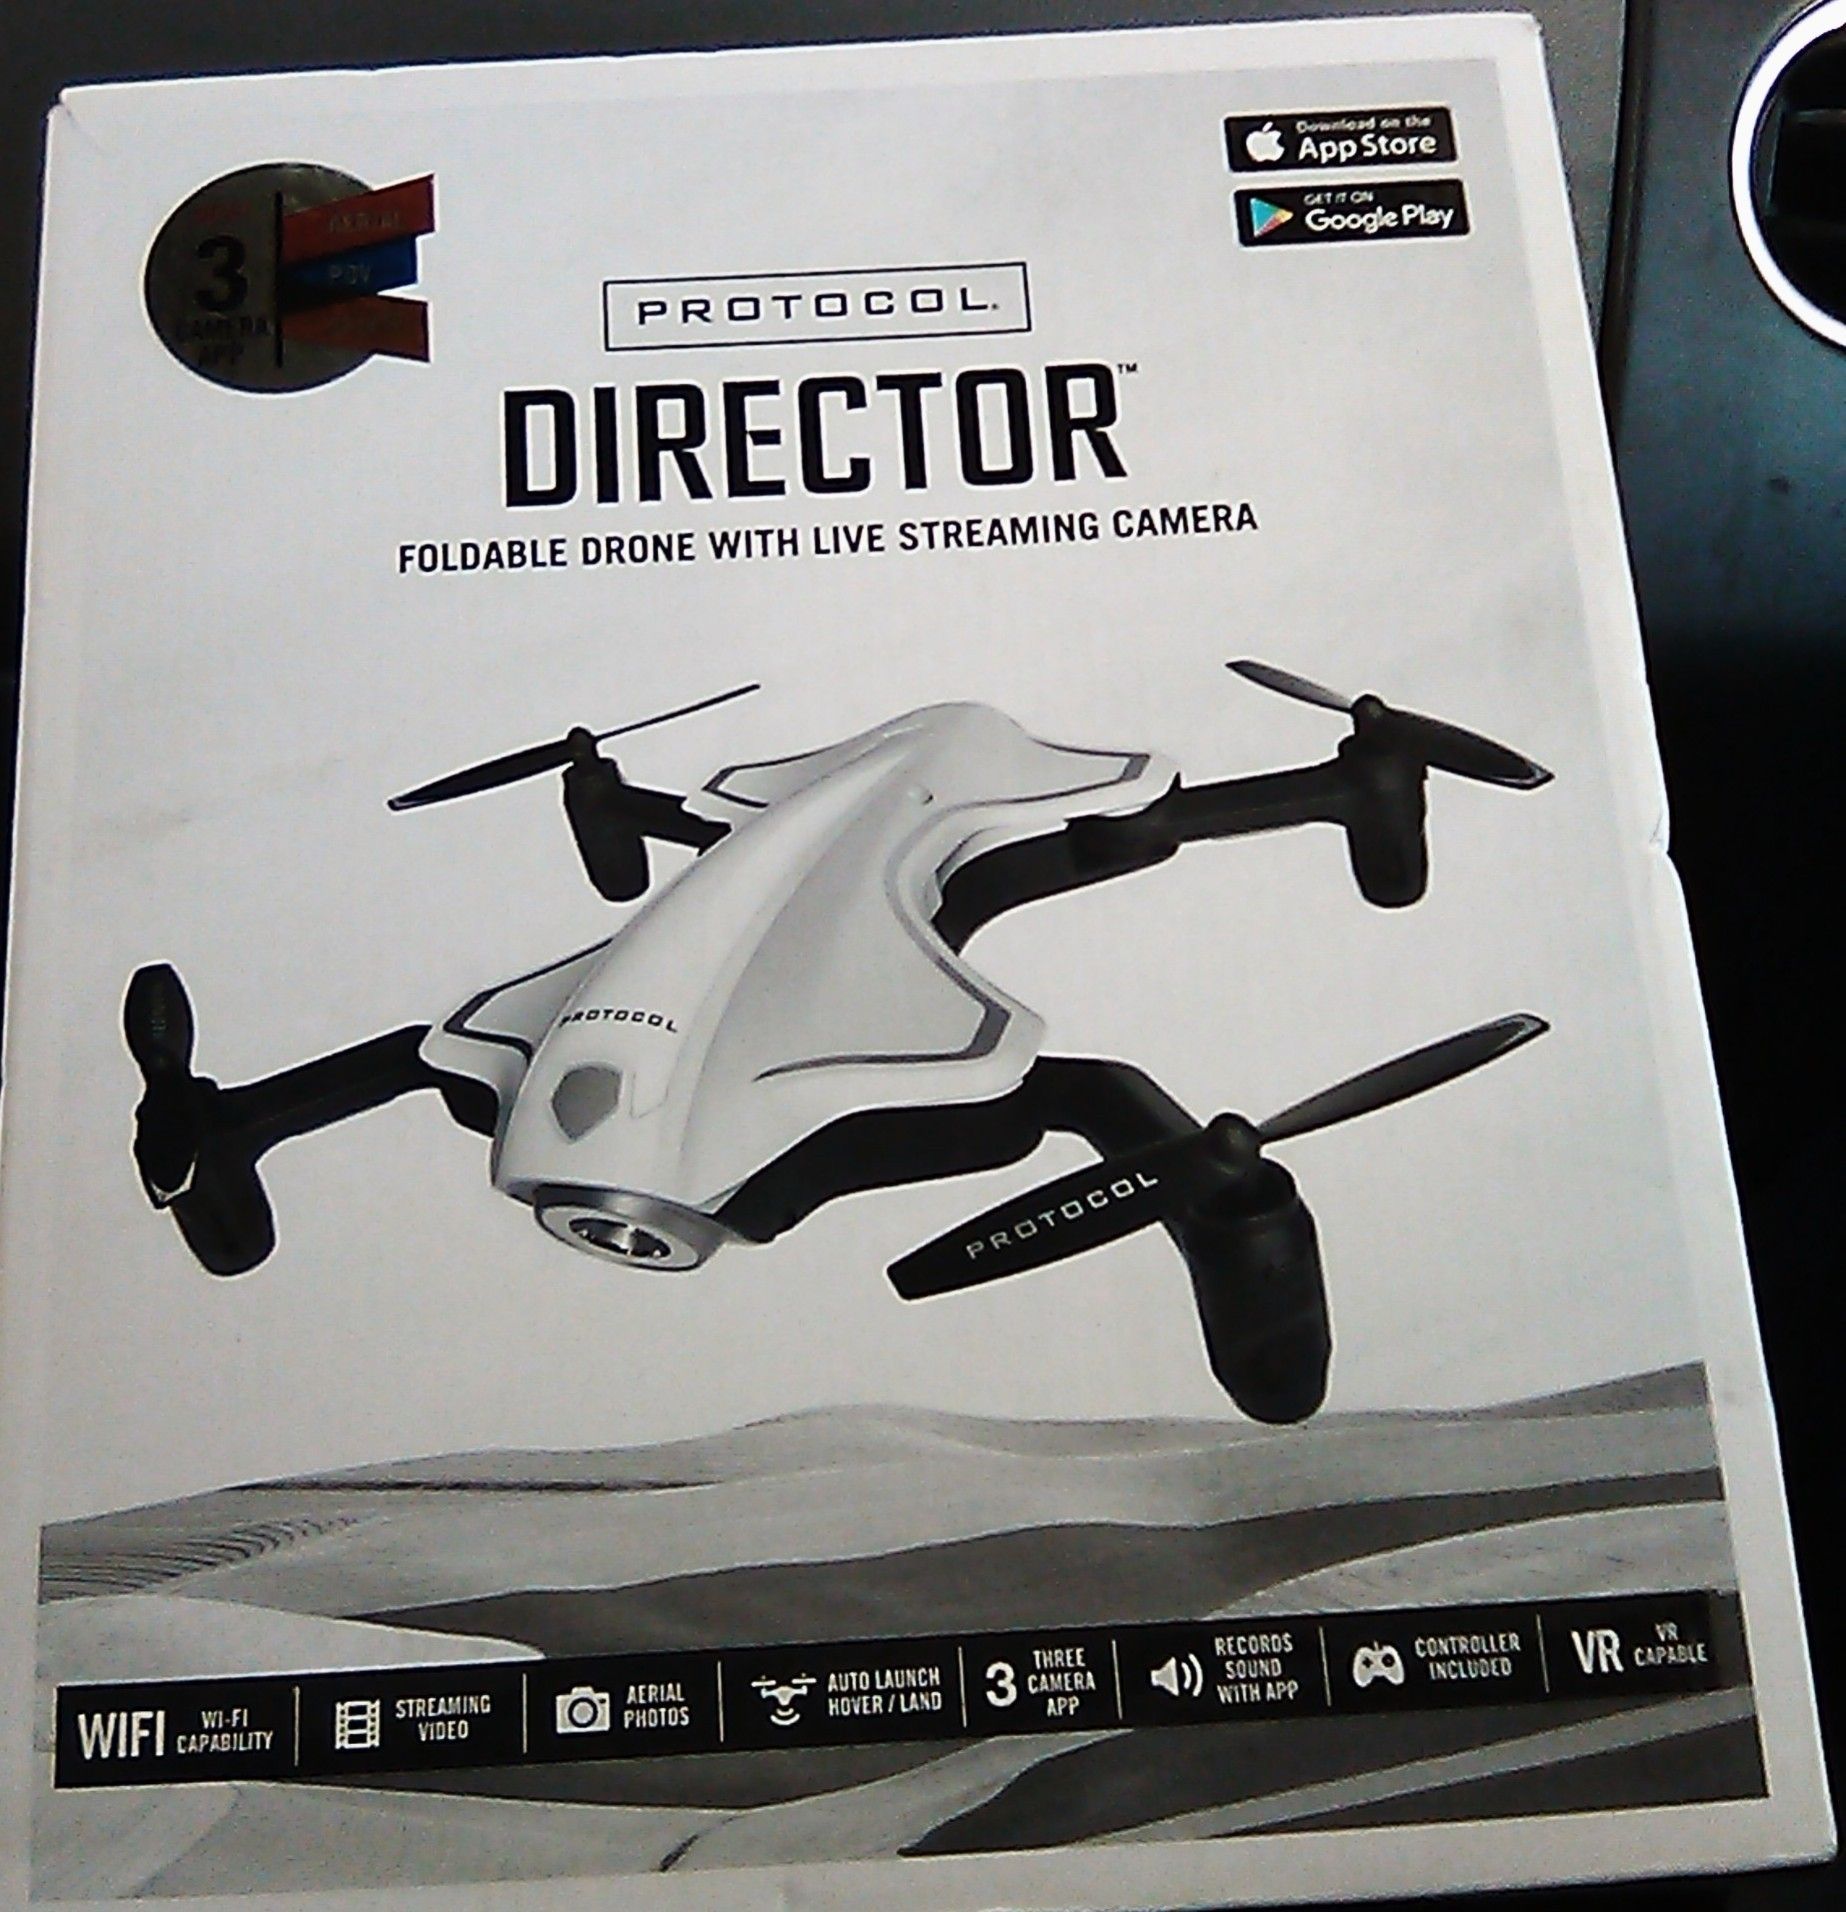 Protocol Director foldable Drone